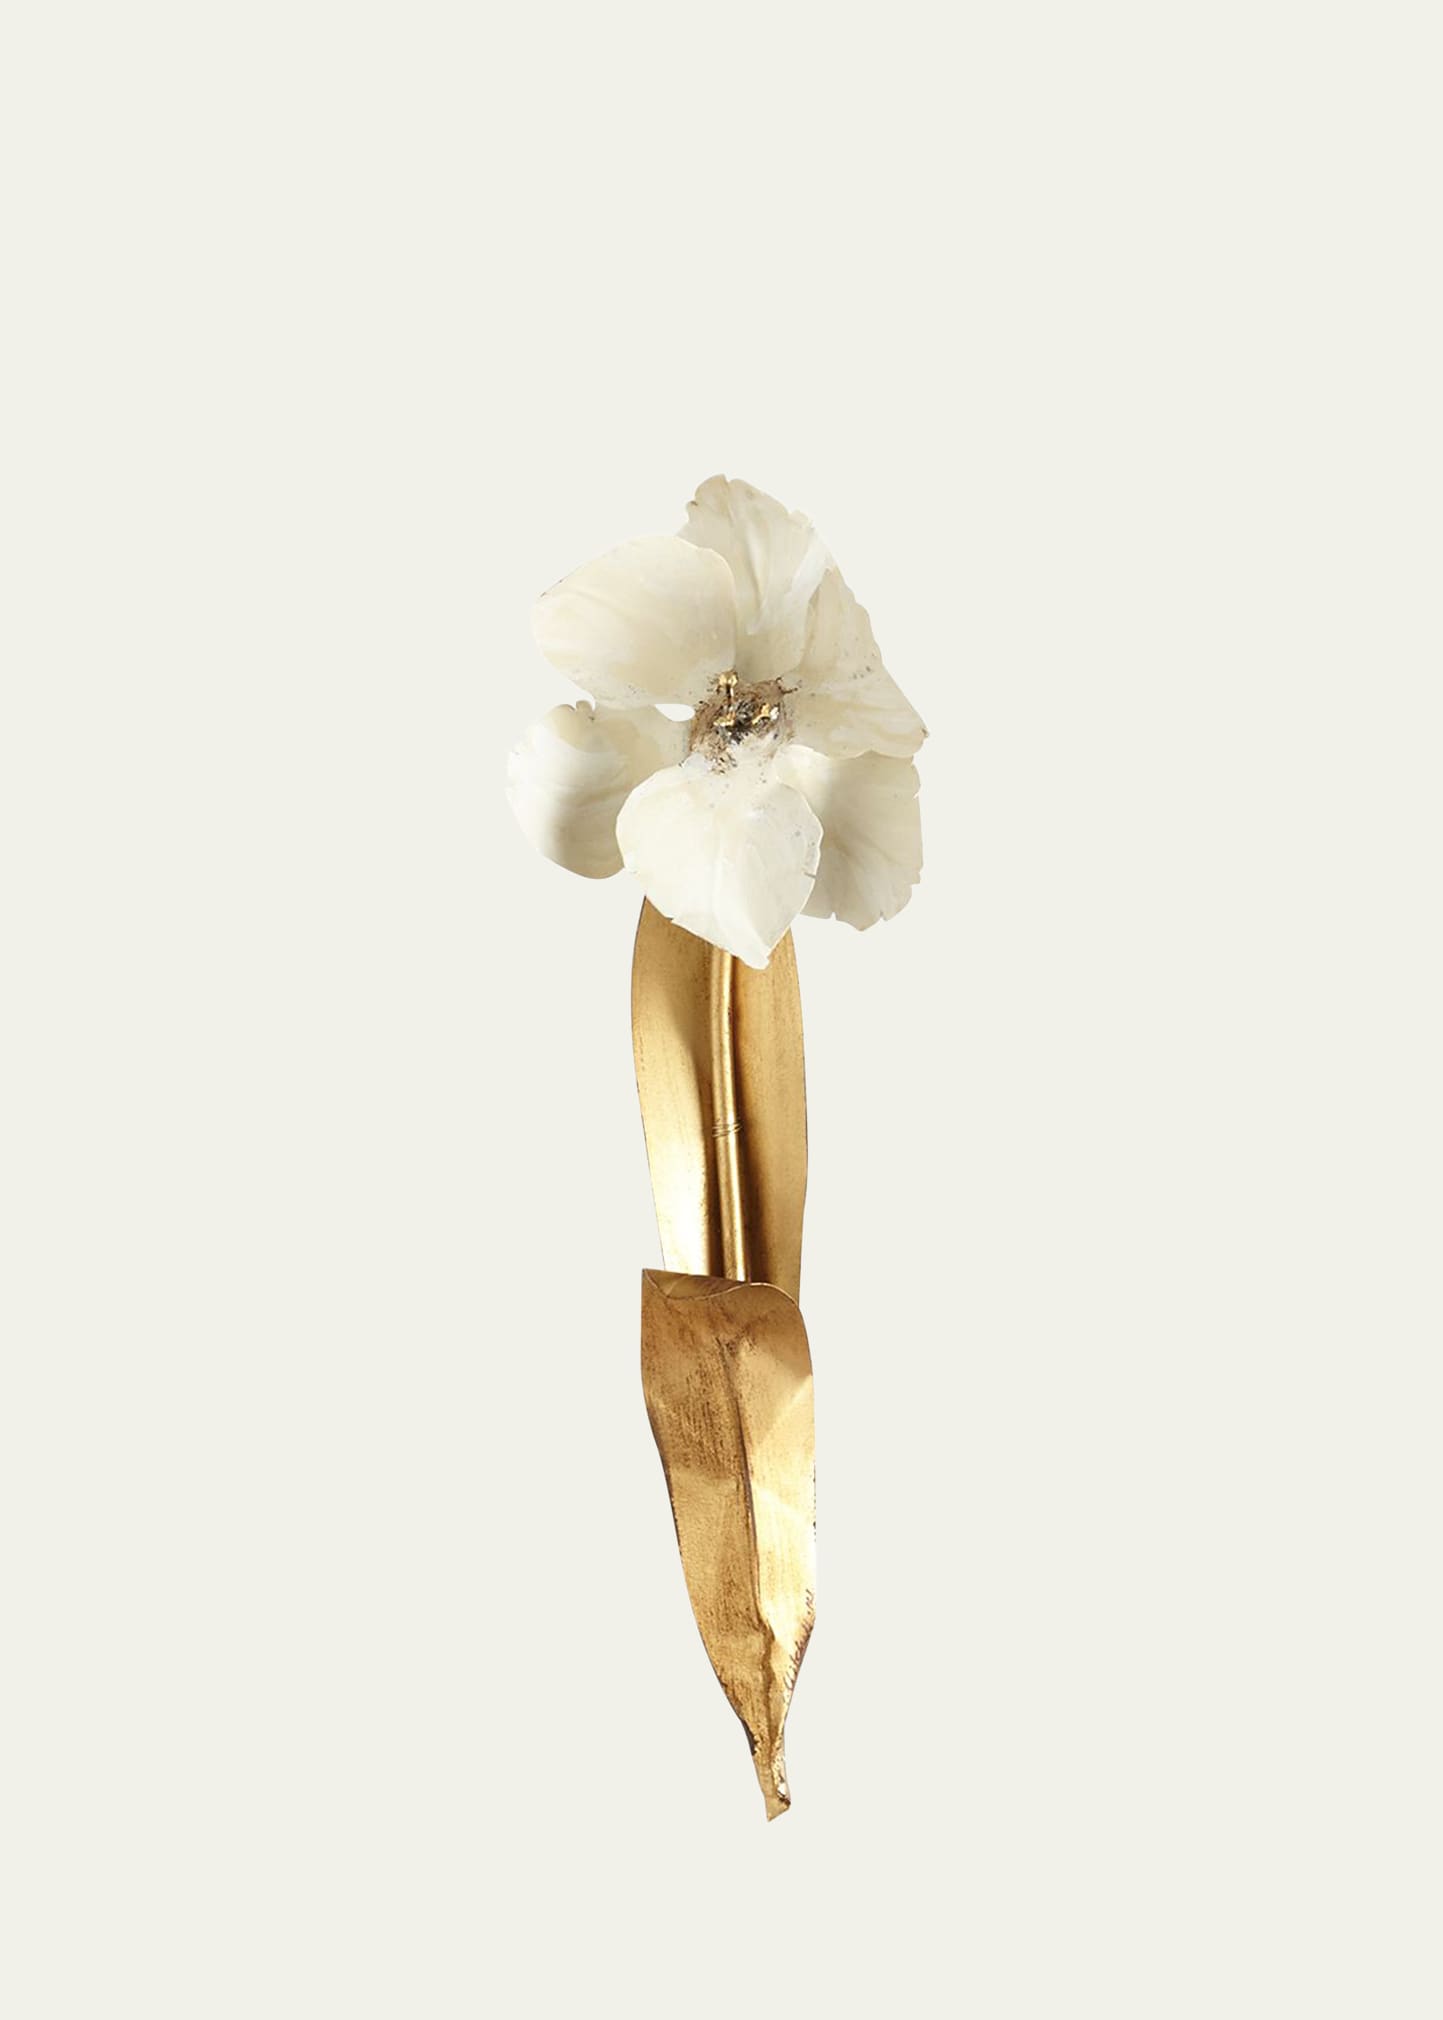 Original Gilded Orchid on White Linen